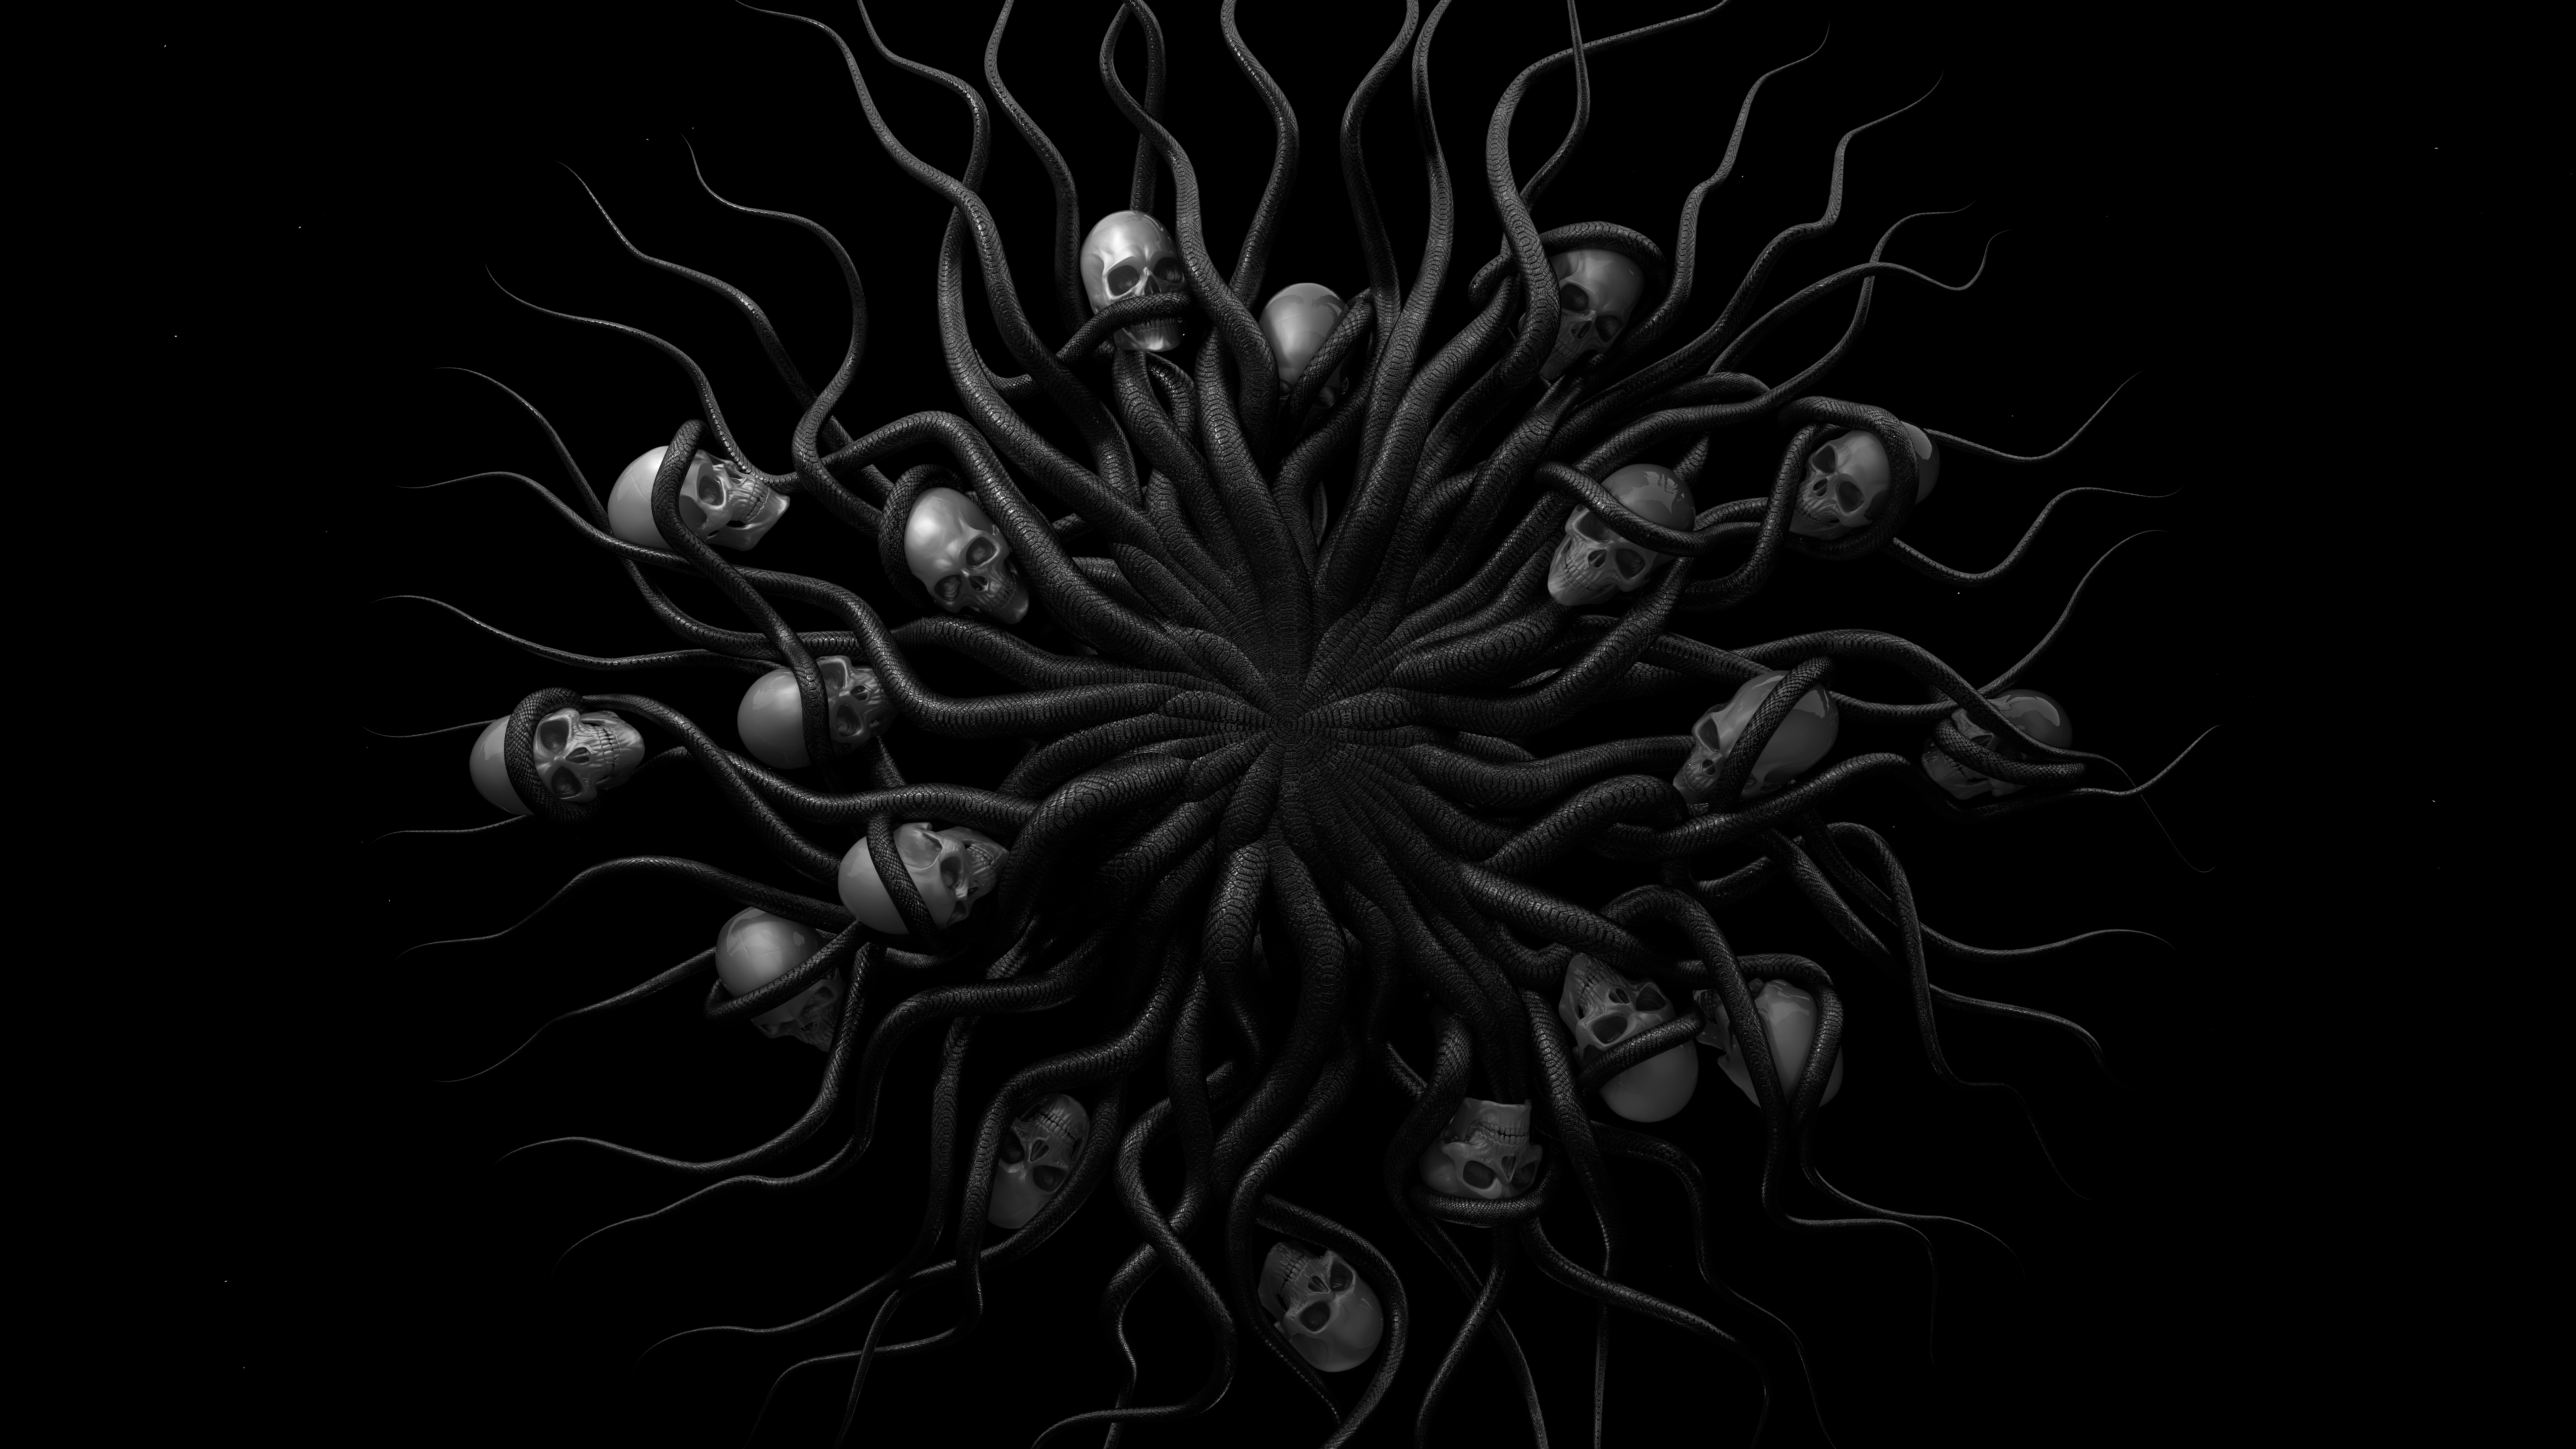 General 7680x4320 CGI black horror skull and bones skull snake shadow dark Halloween pattern artwork tentacles